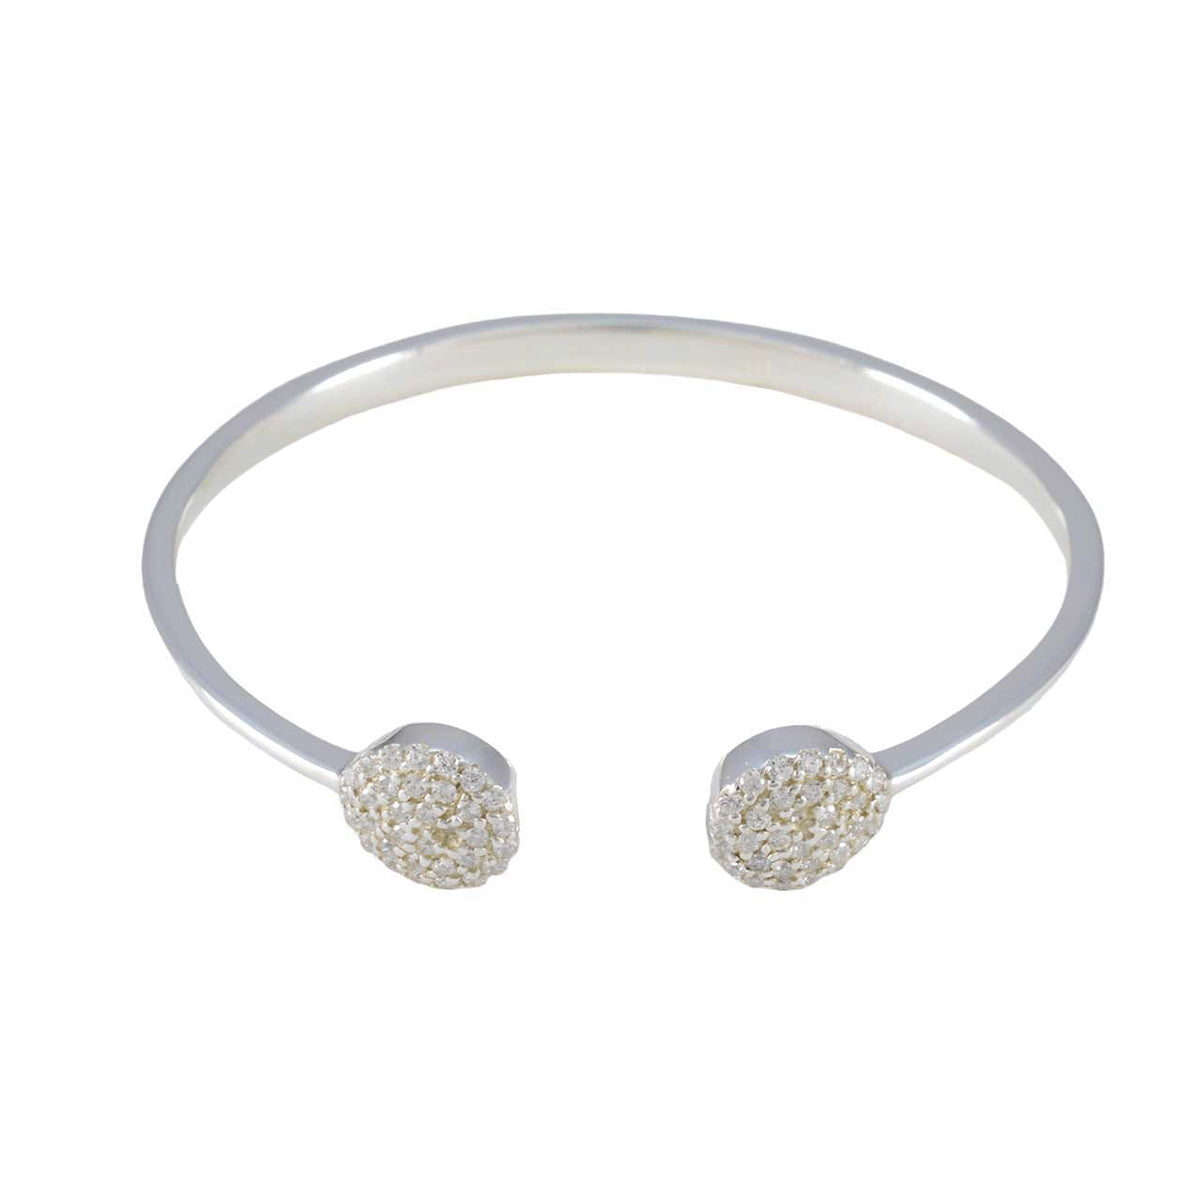 Riyo Best 925 Sterling Silver Bracelet For Girls White CZ Bracelet Bezel Setting Bracelet Bangle Bracelet L Size 6-8.5 Inch.